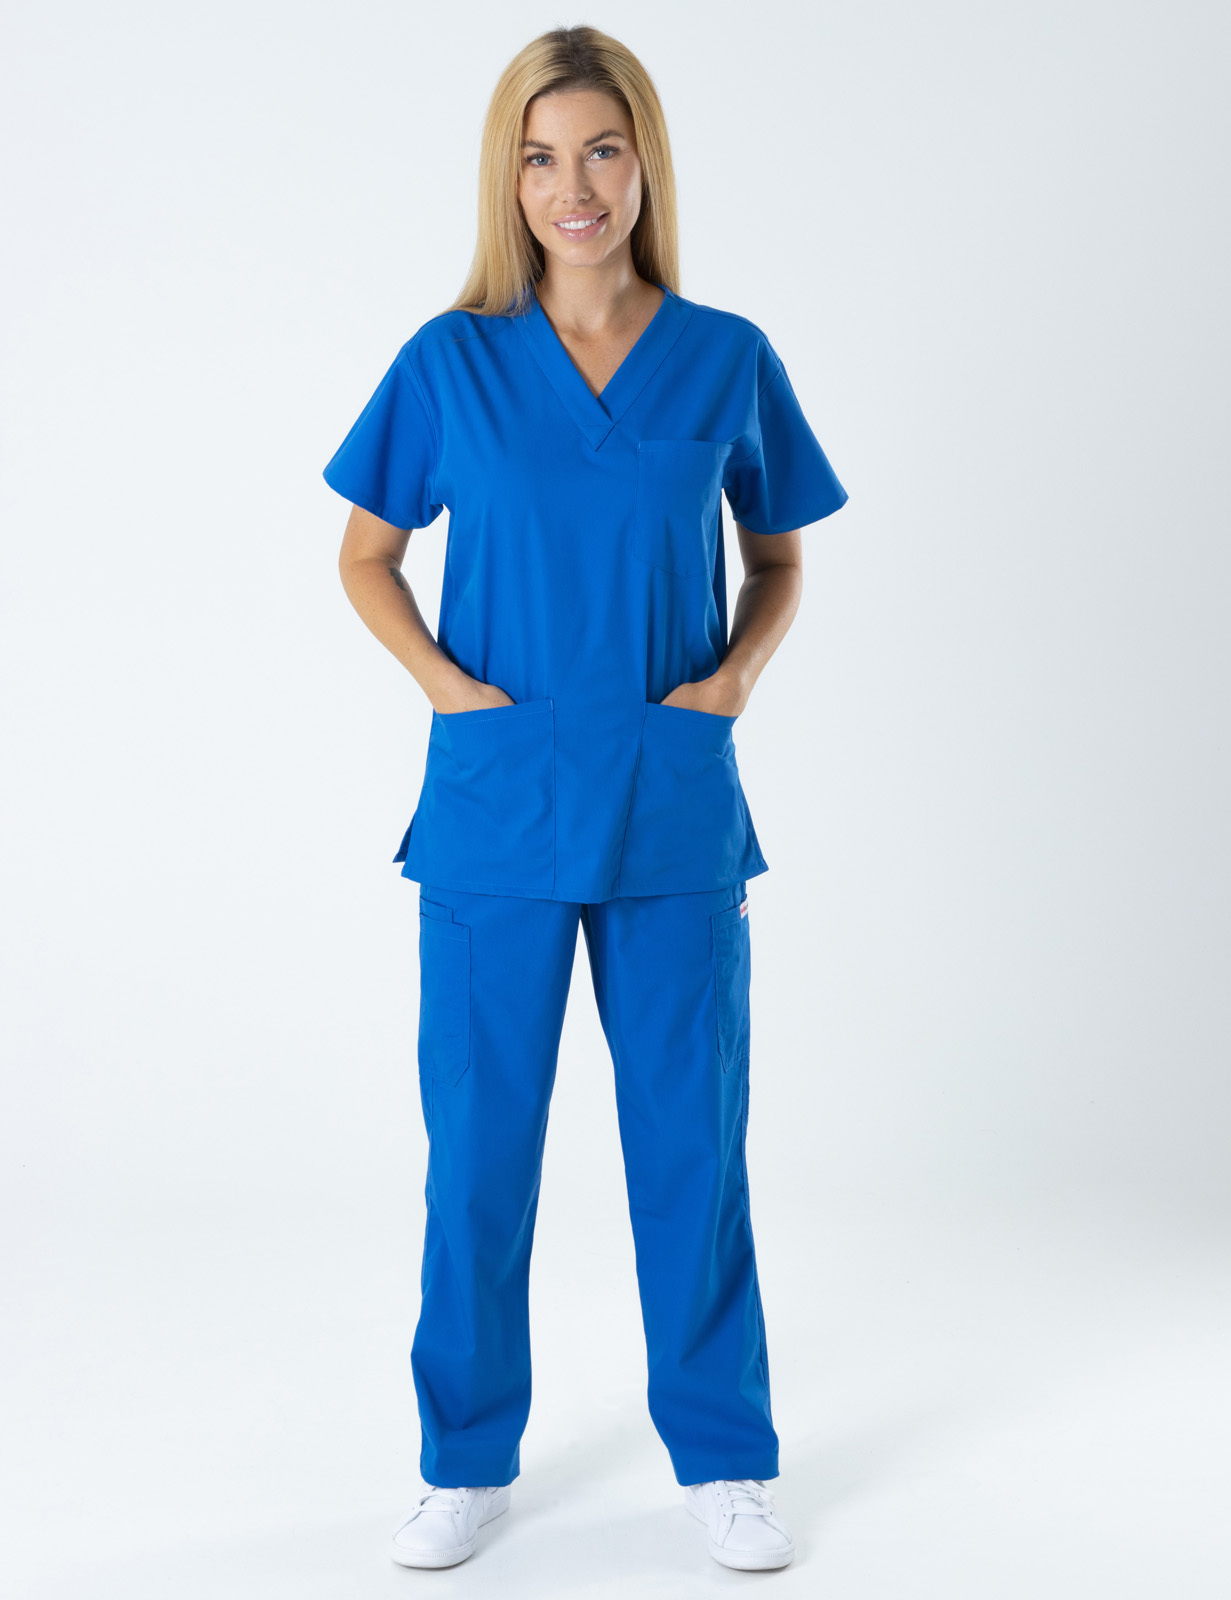 Royal Hobart Hospital - Emergency Doctor (4 Pocket Scrub top and Cargo Pants in Royal incl Logos)